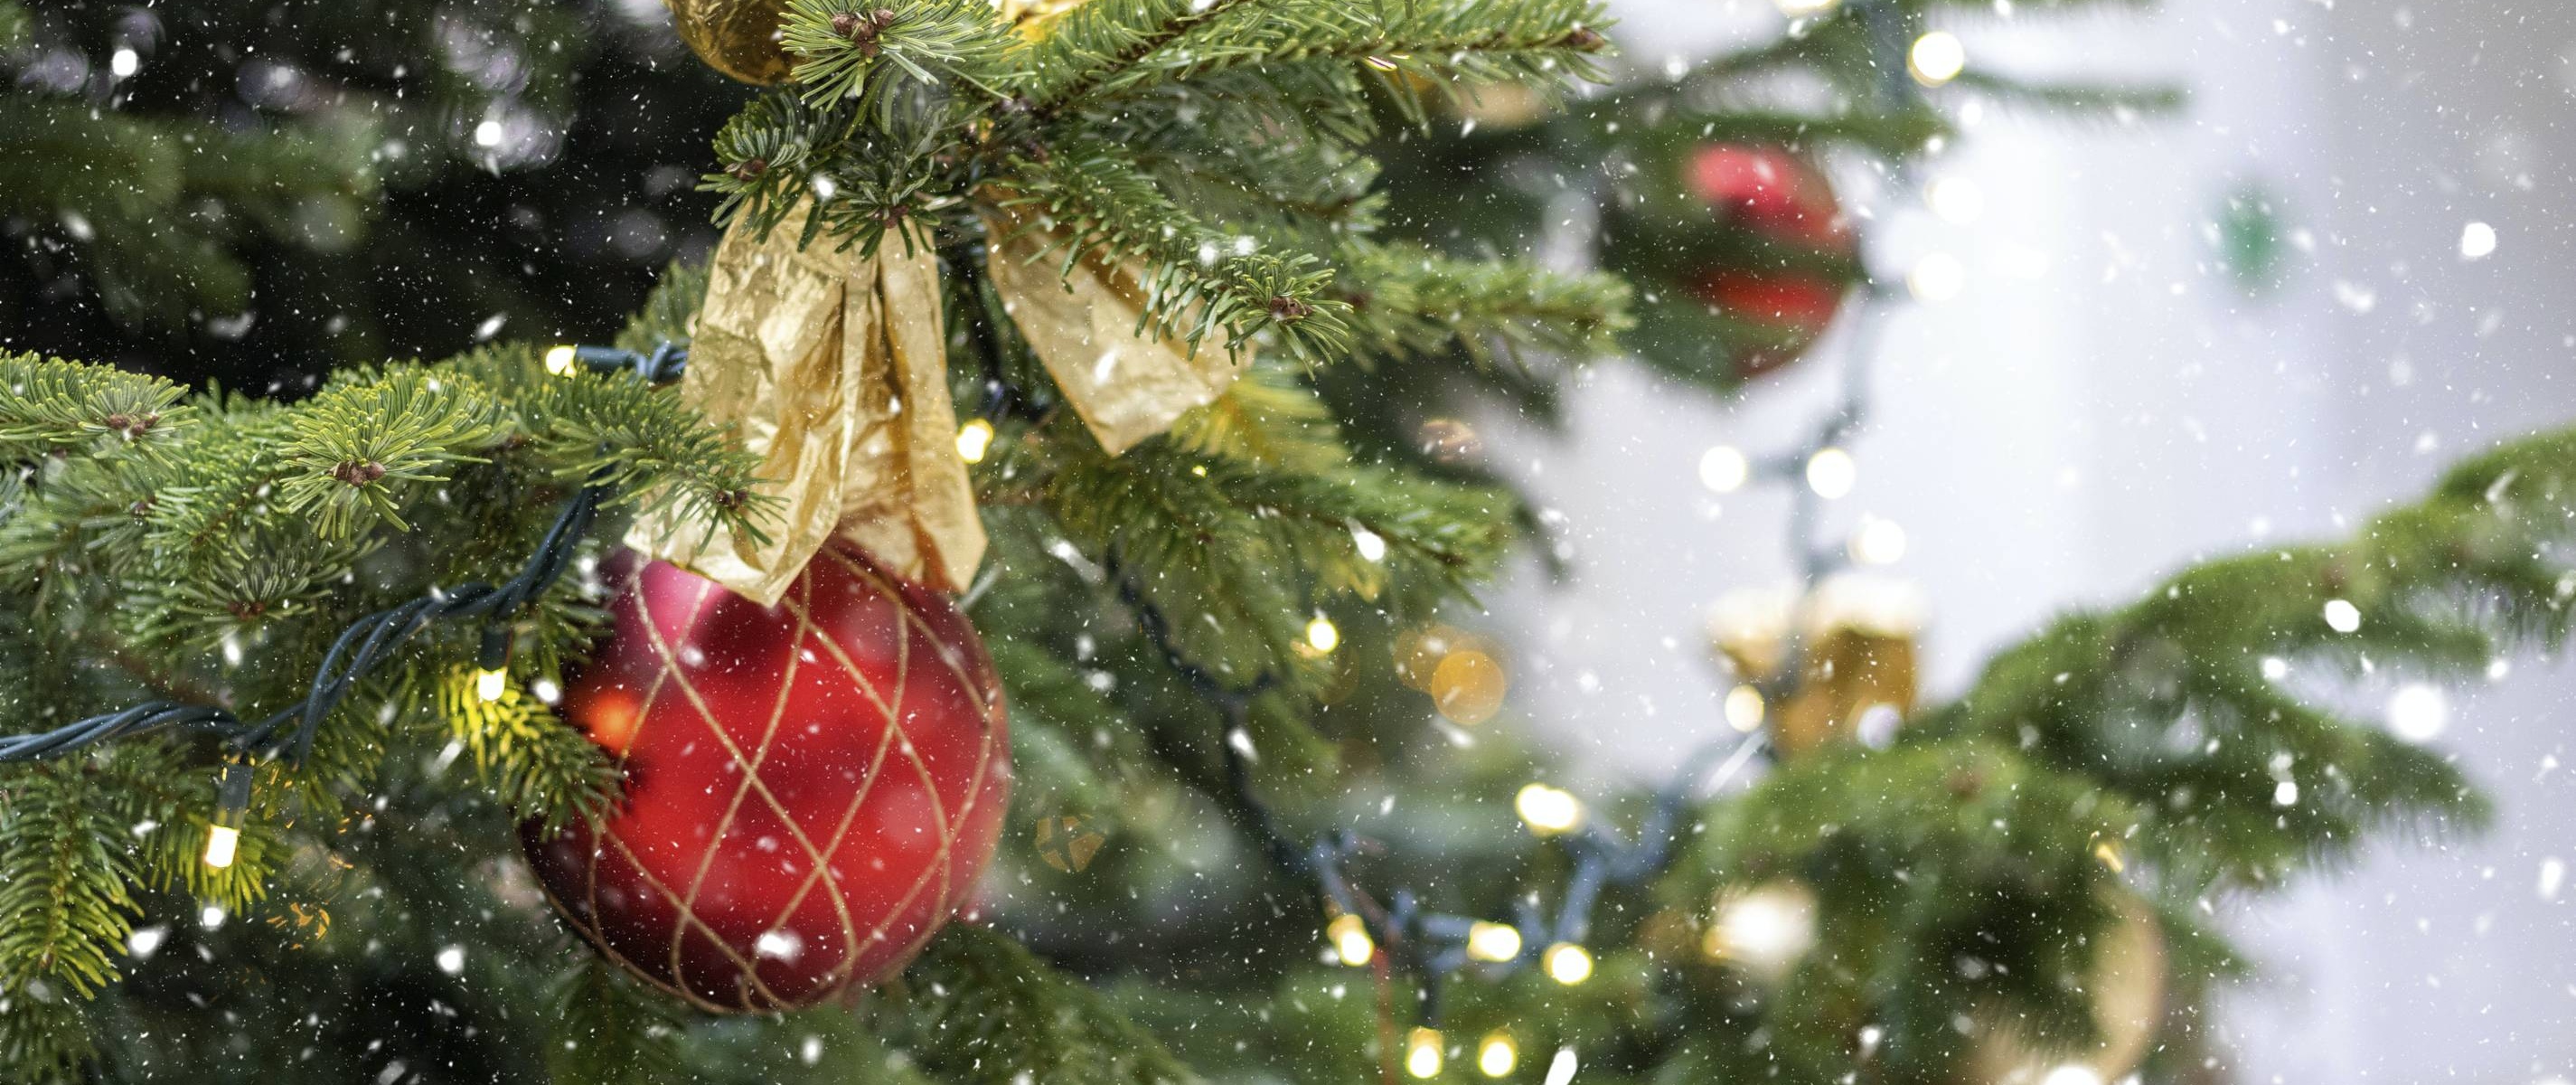 7 Stunning Christmas Tree Ornaments to Add Seasonal Sparkle